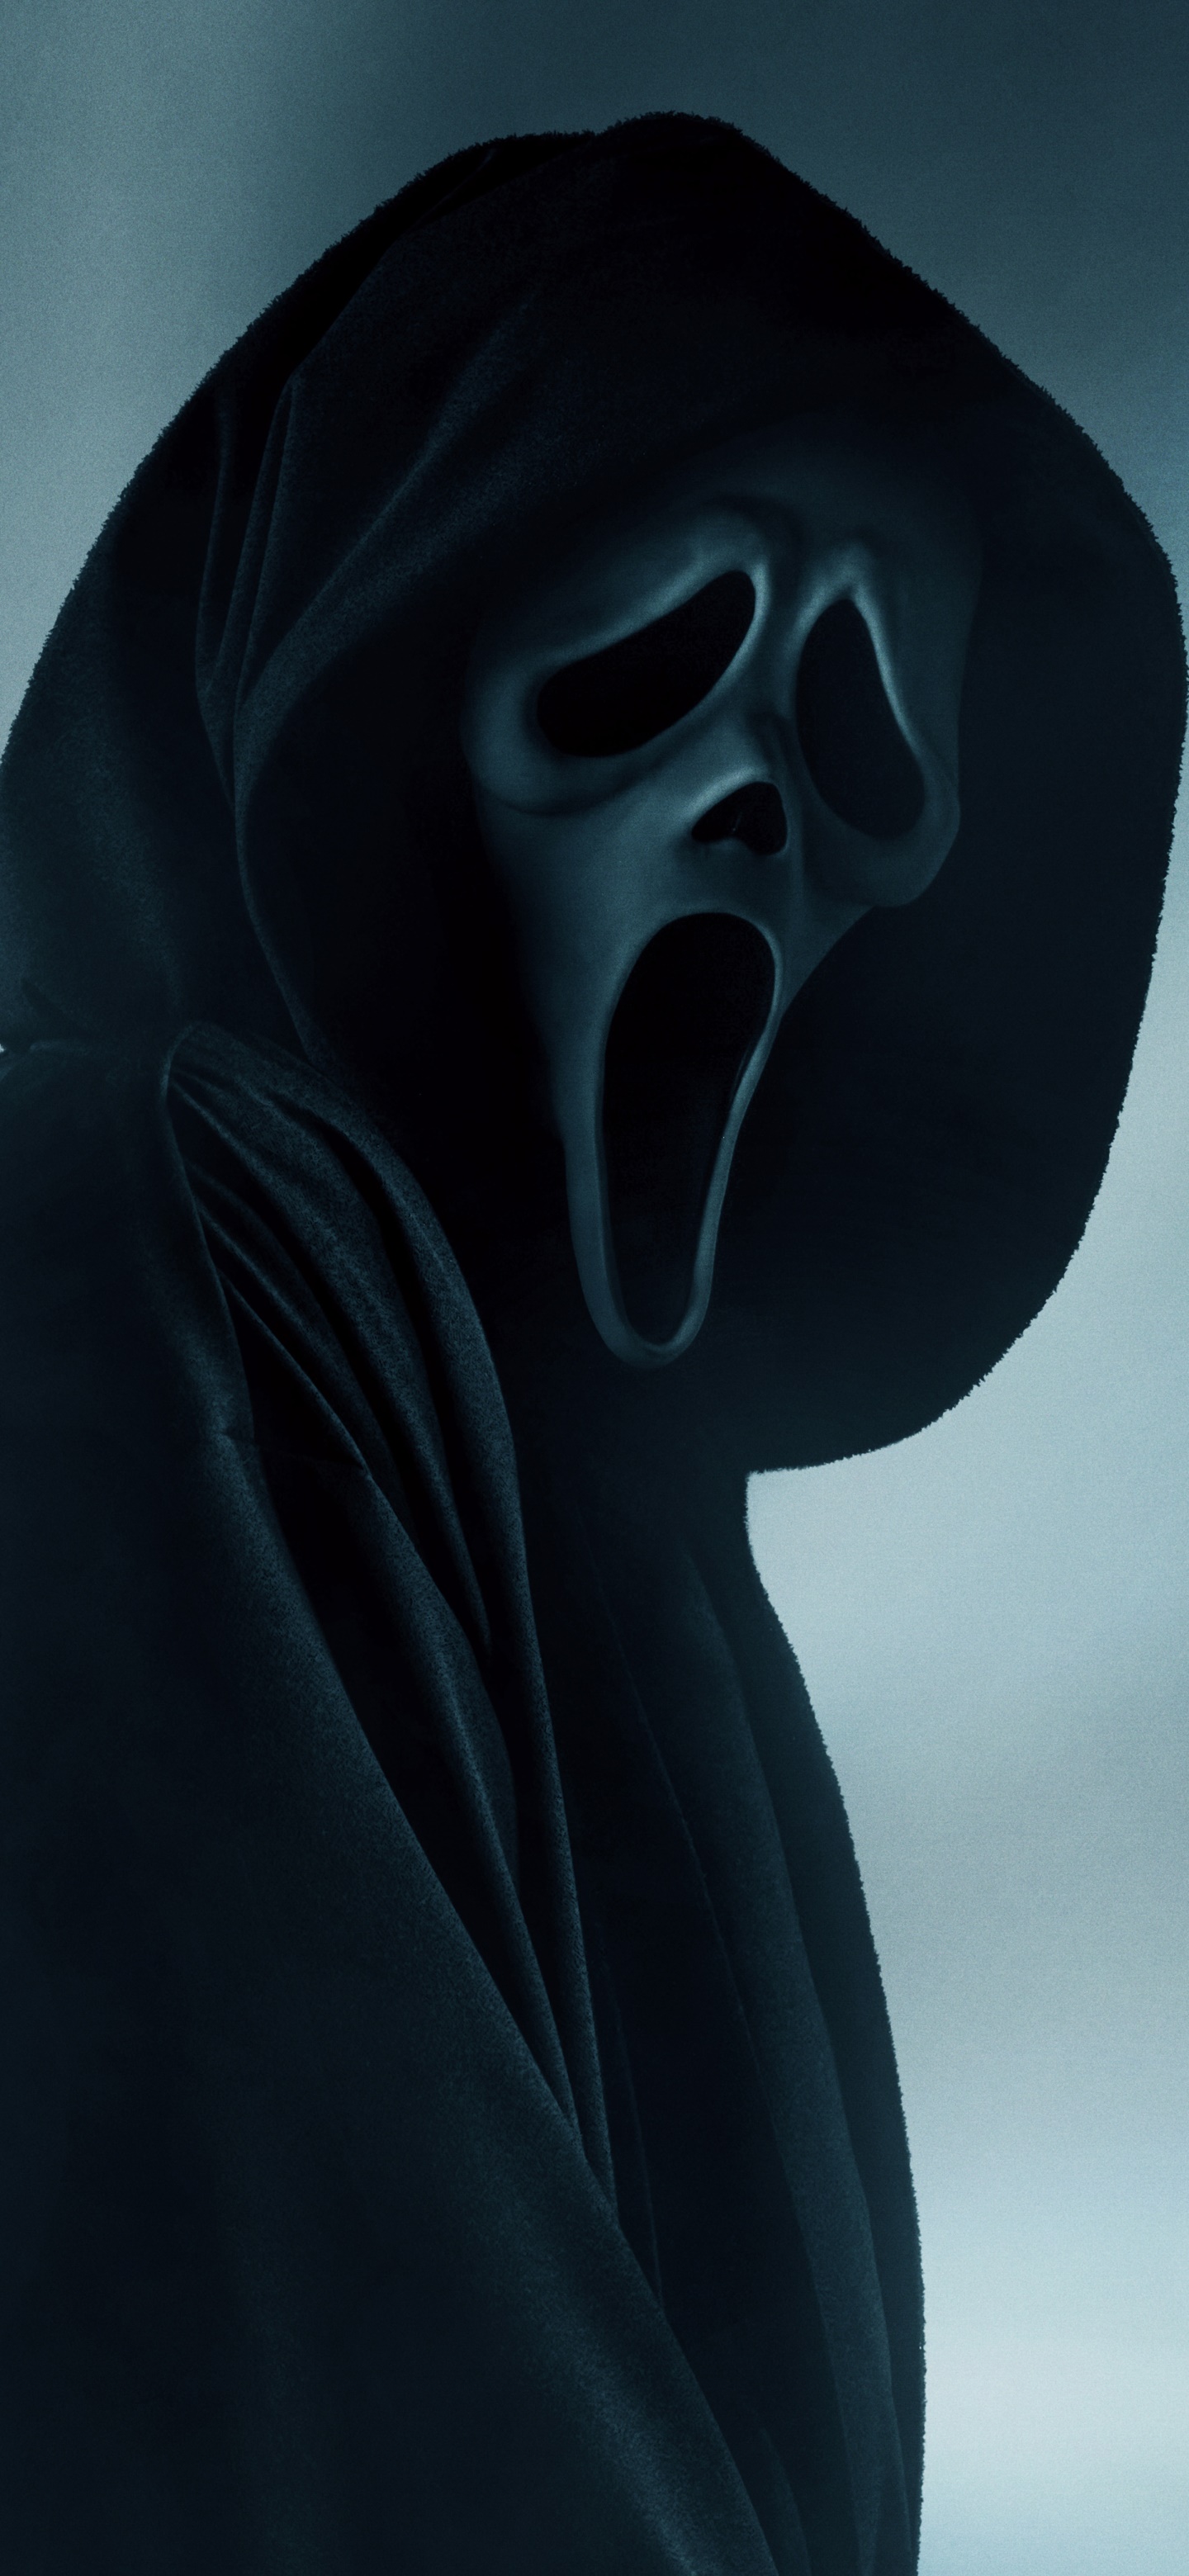 Wallpaper / Movie Scream (2022) Phone Wallpaper, Ghostface ( Scream), 1440x3120 free download